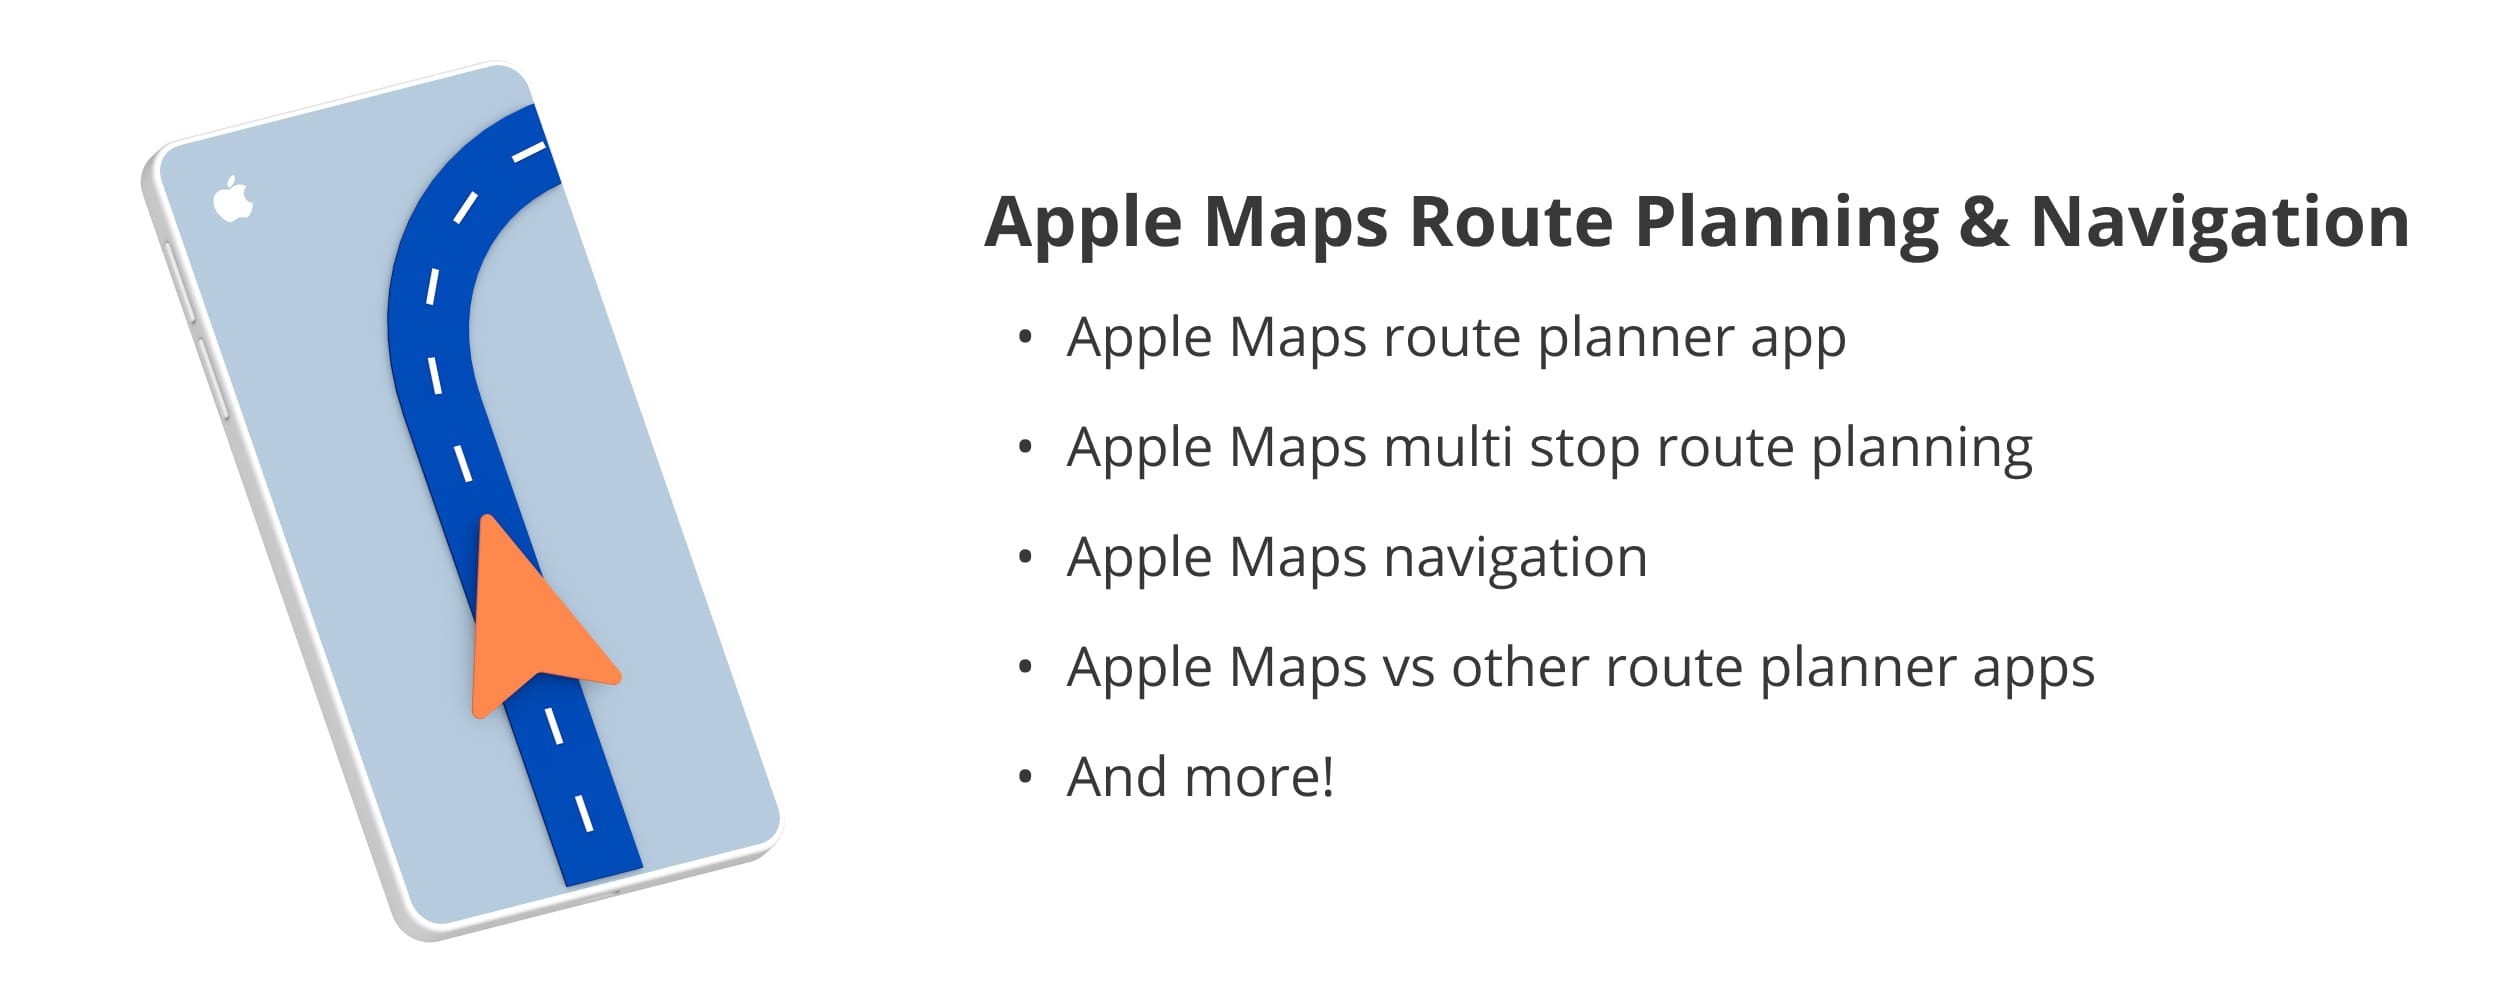 Apple Maps Route Navigation - iPhone Route Planner App